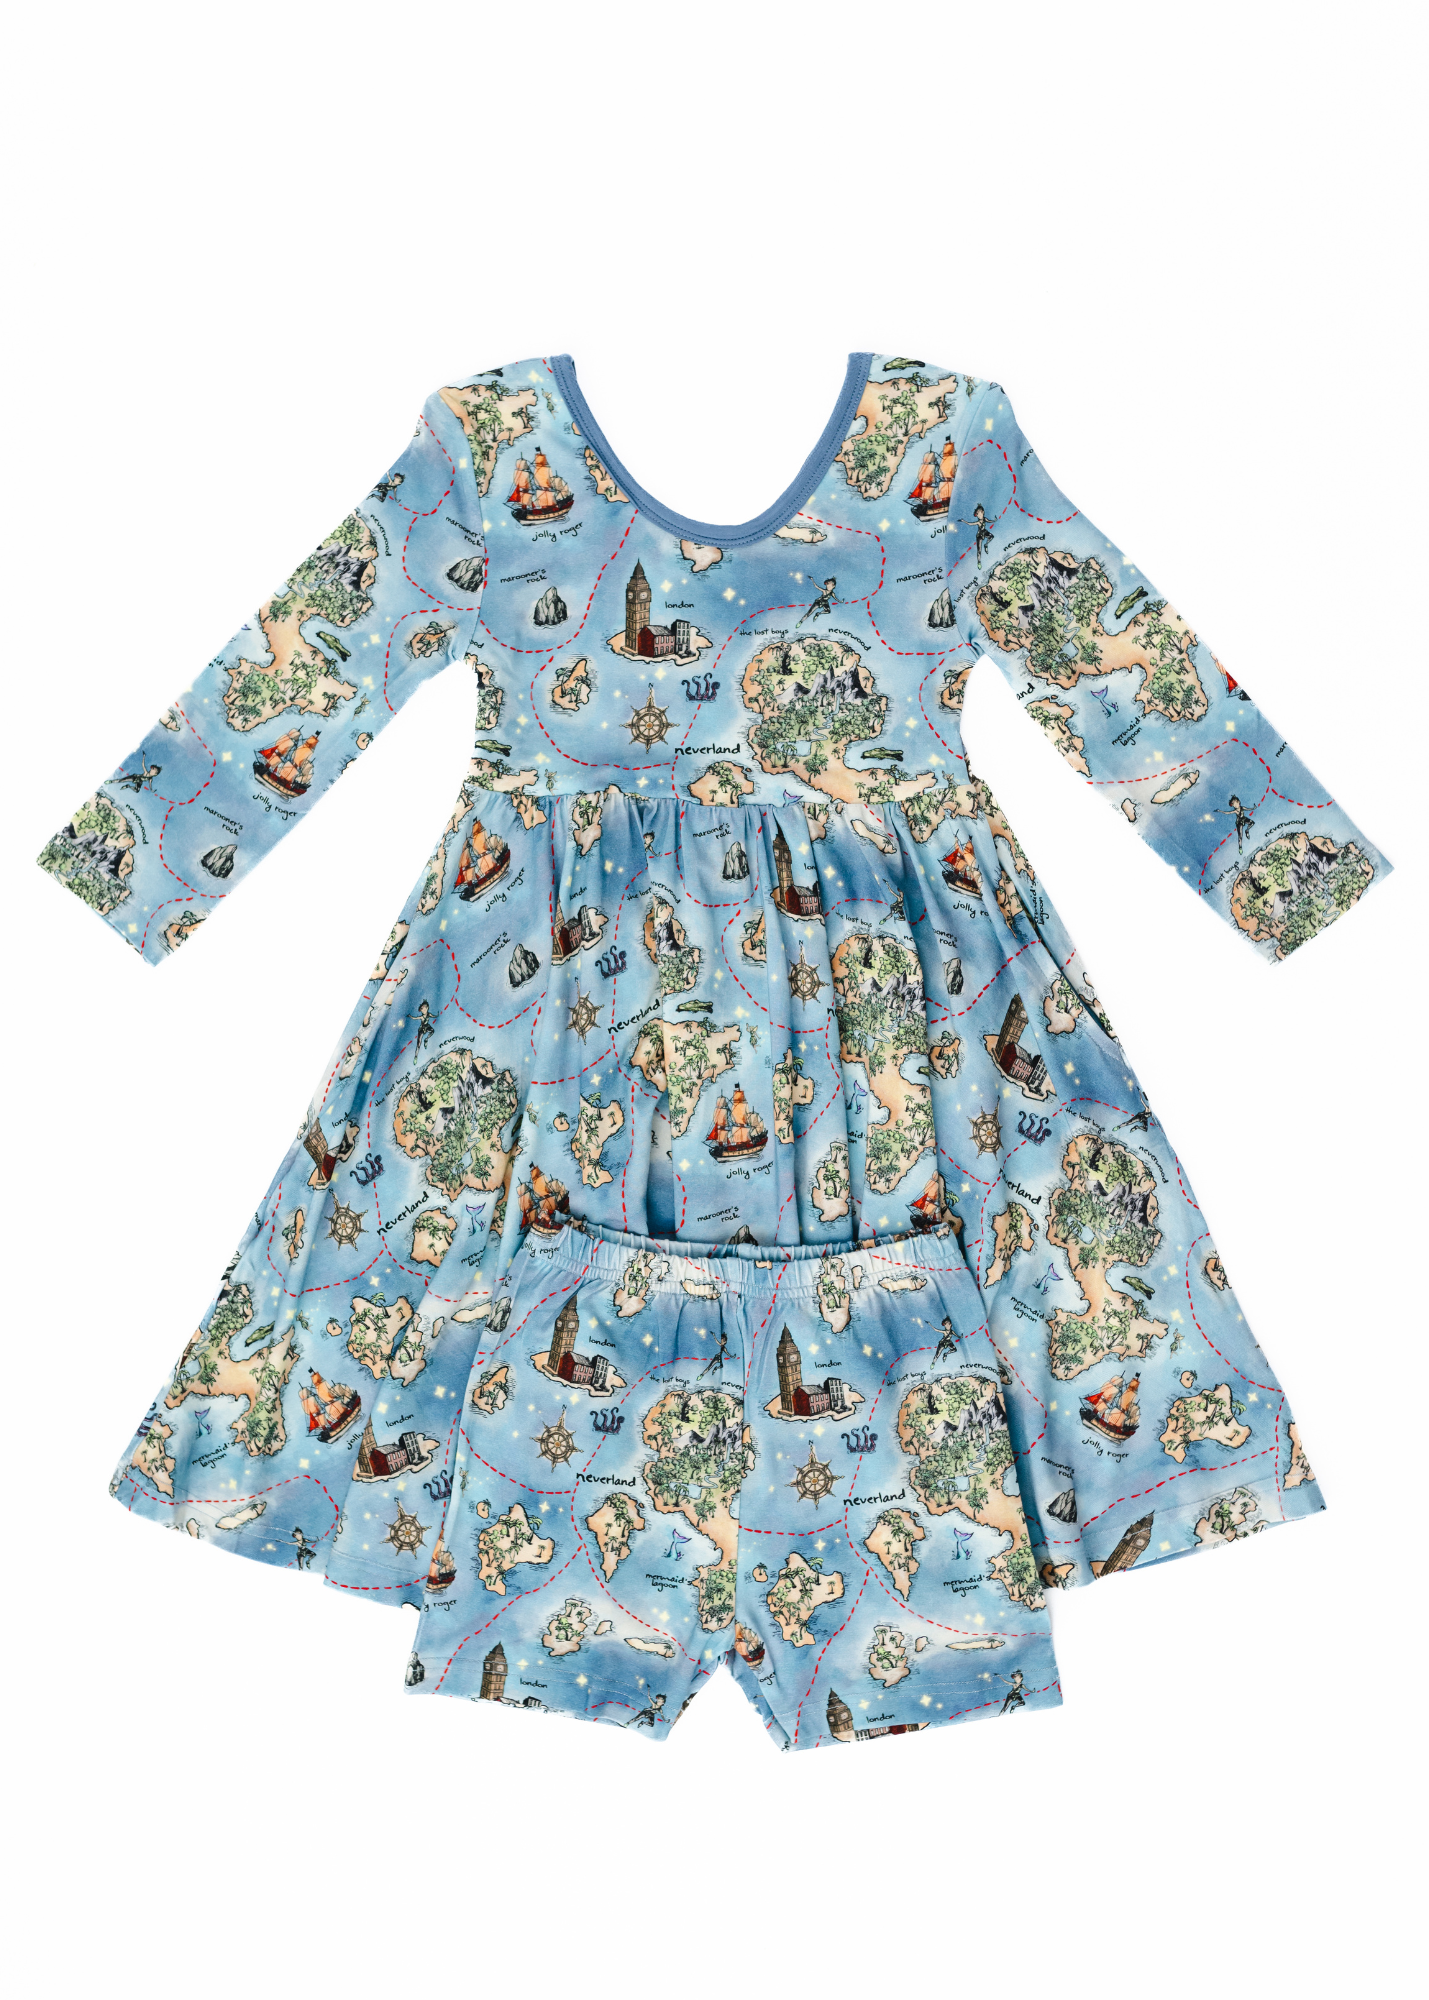 Neverland Map Twirl Dress